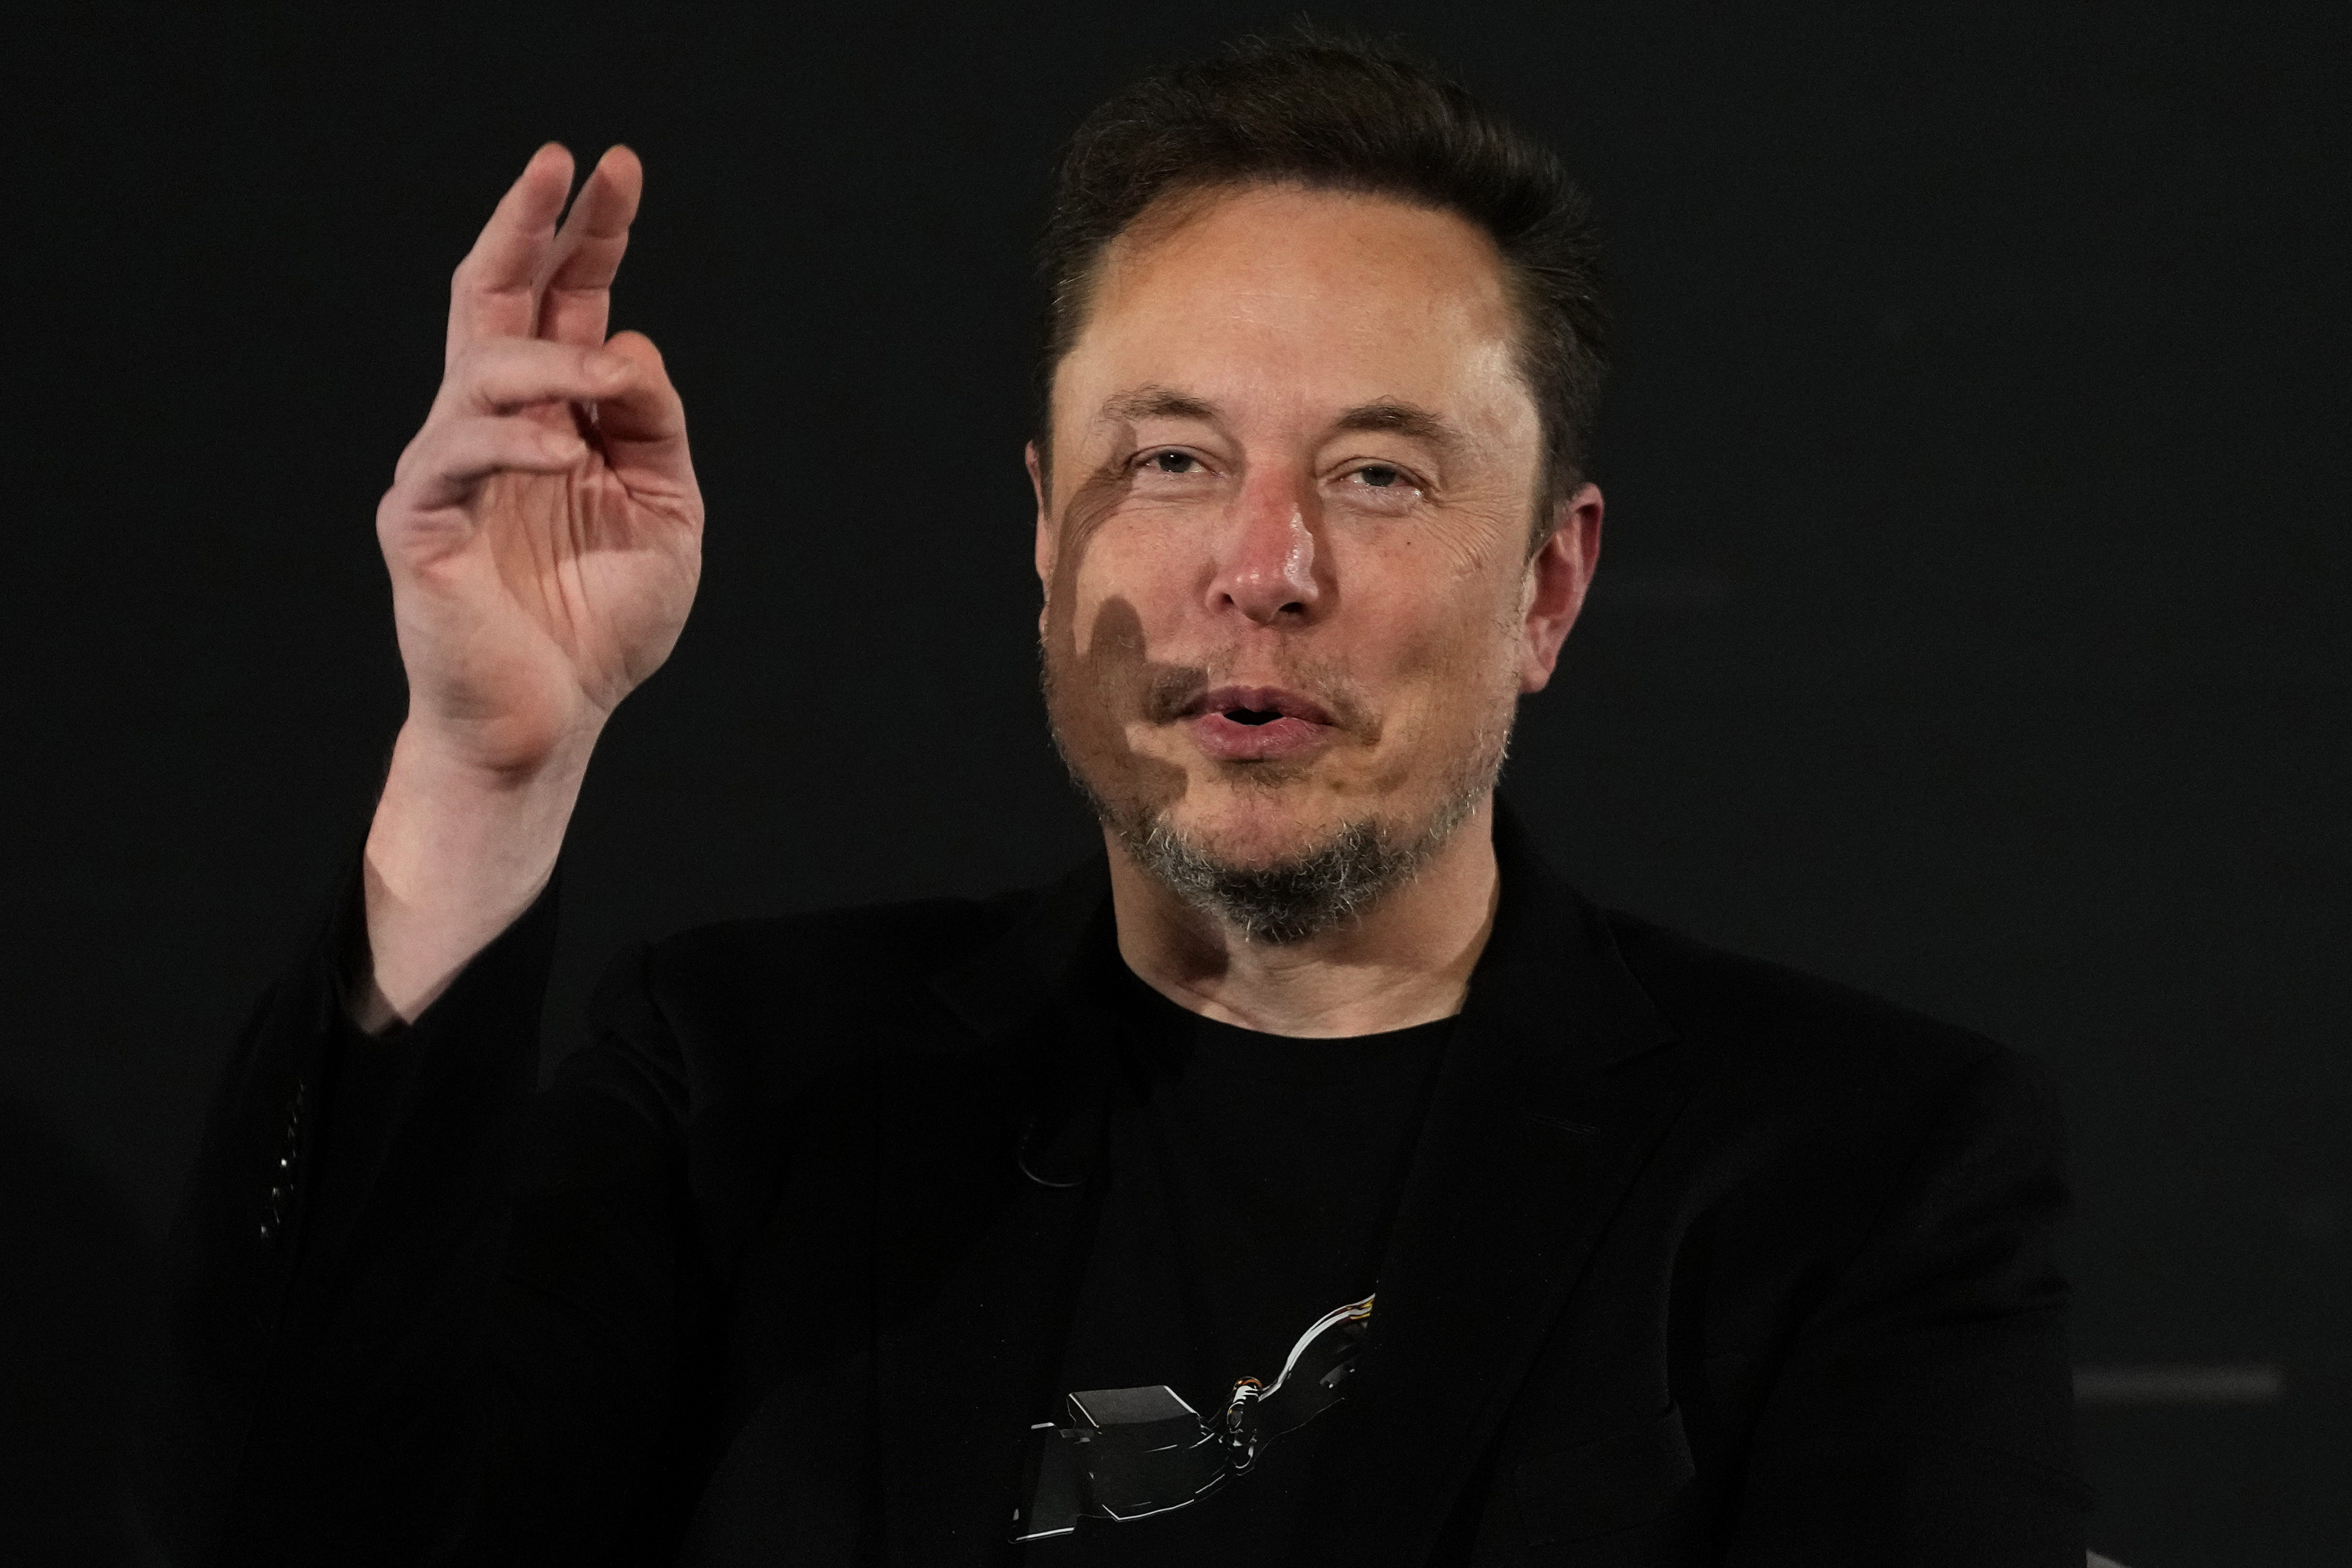 Elon Musk, owner of social media platform X, gestures during an event in London on November 2. Photo: AP